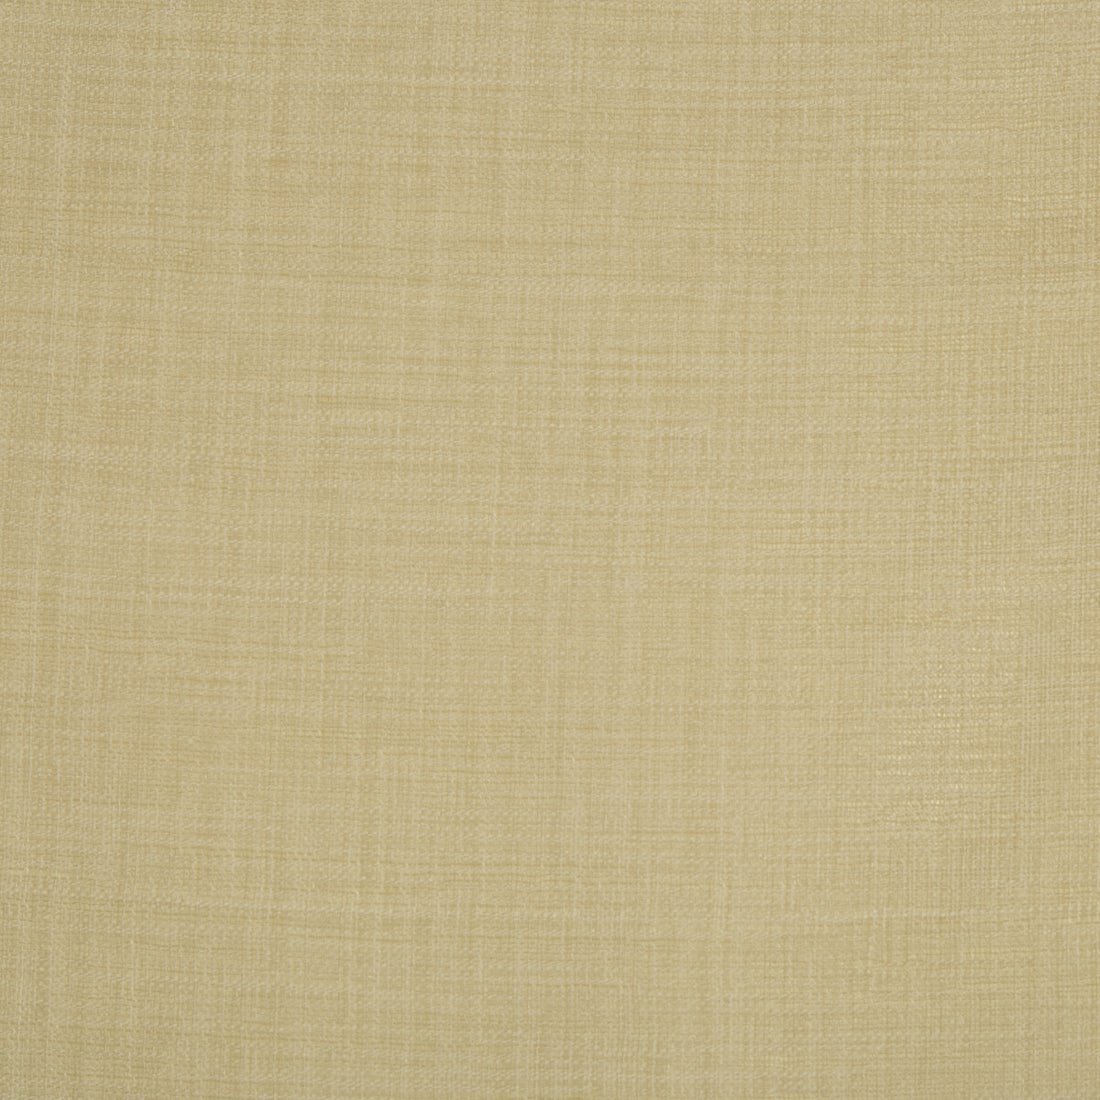 Kravet Basics fabric in 4250-16 color - pattern 4250.16.0 - by Kravet Basics in the Gis collection